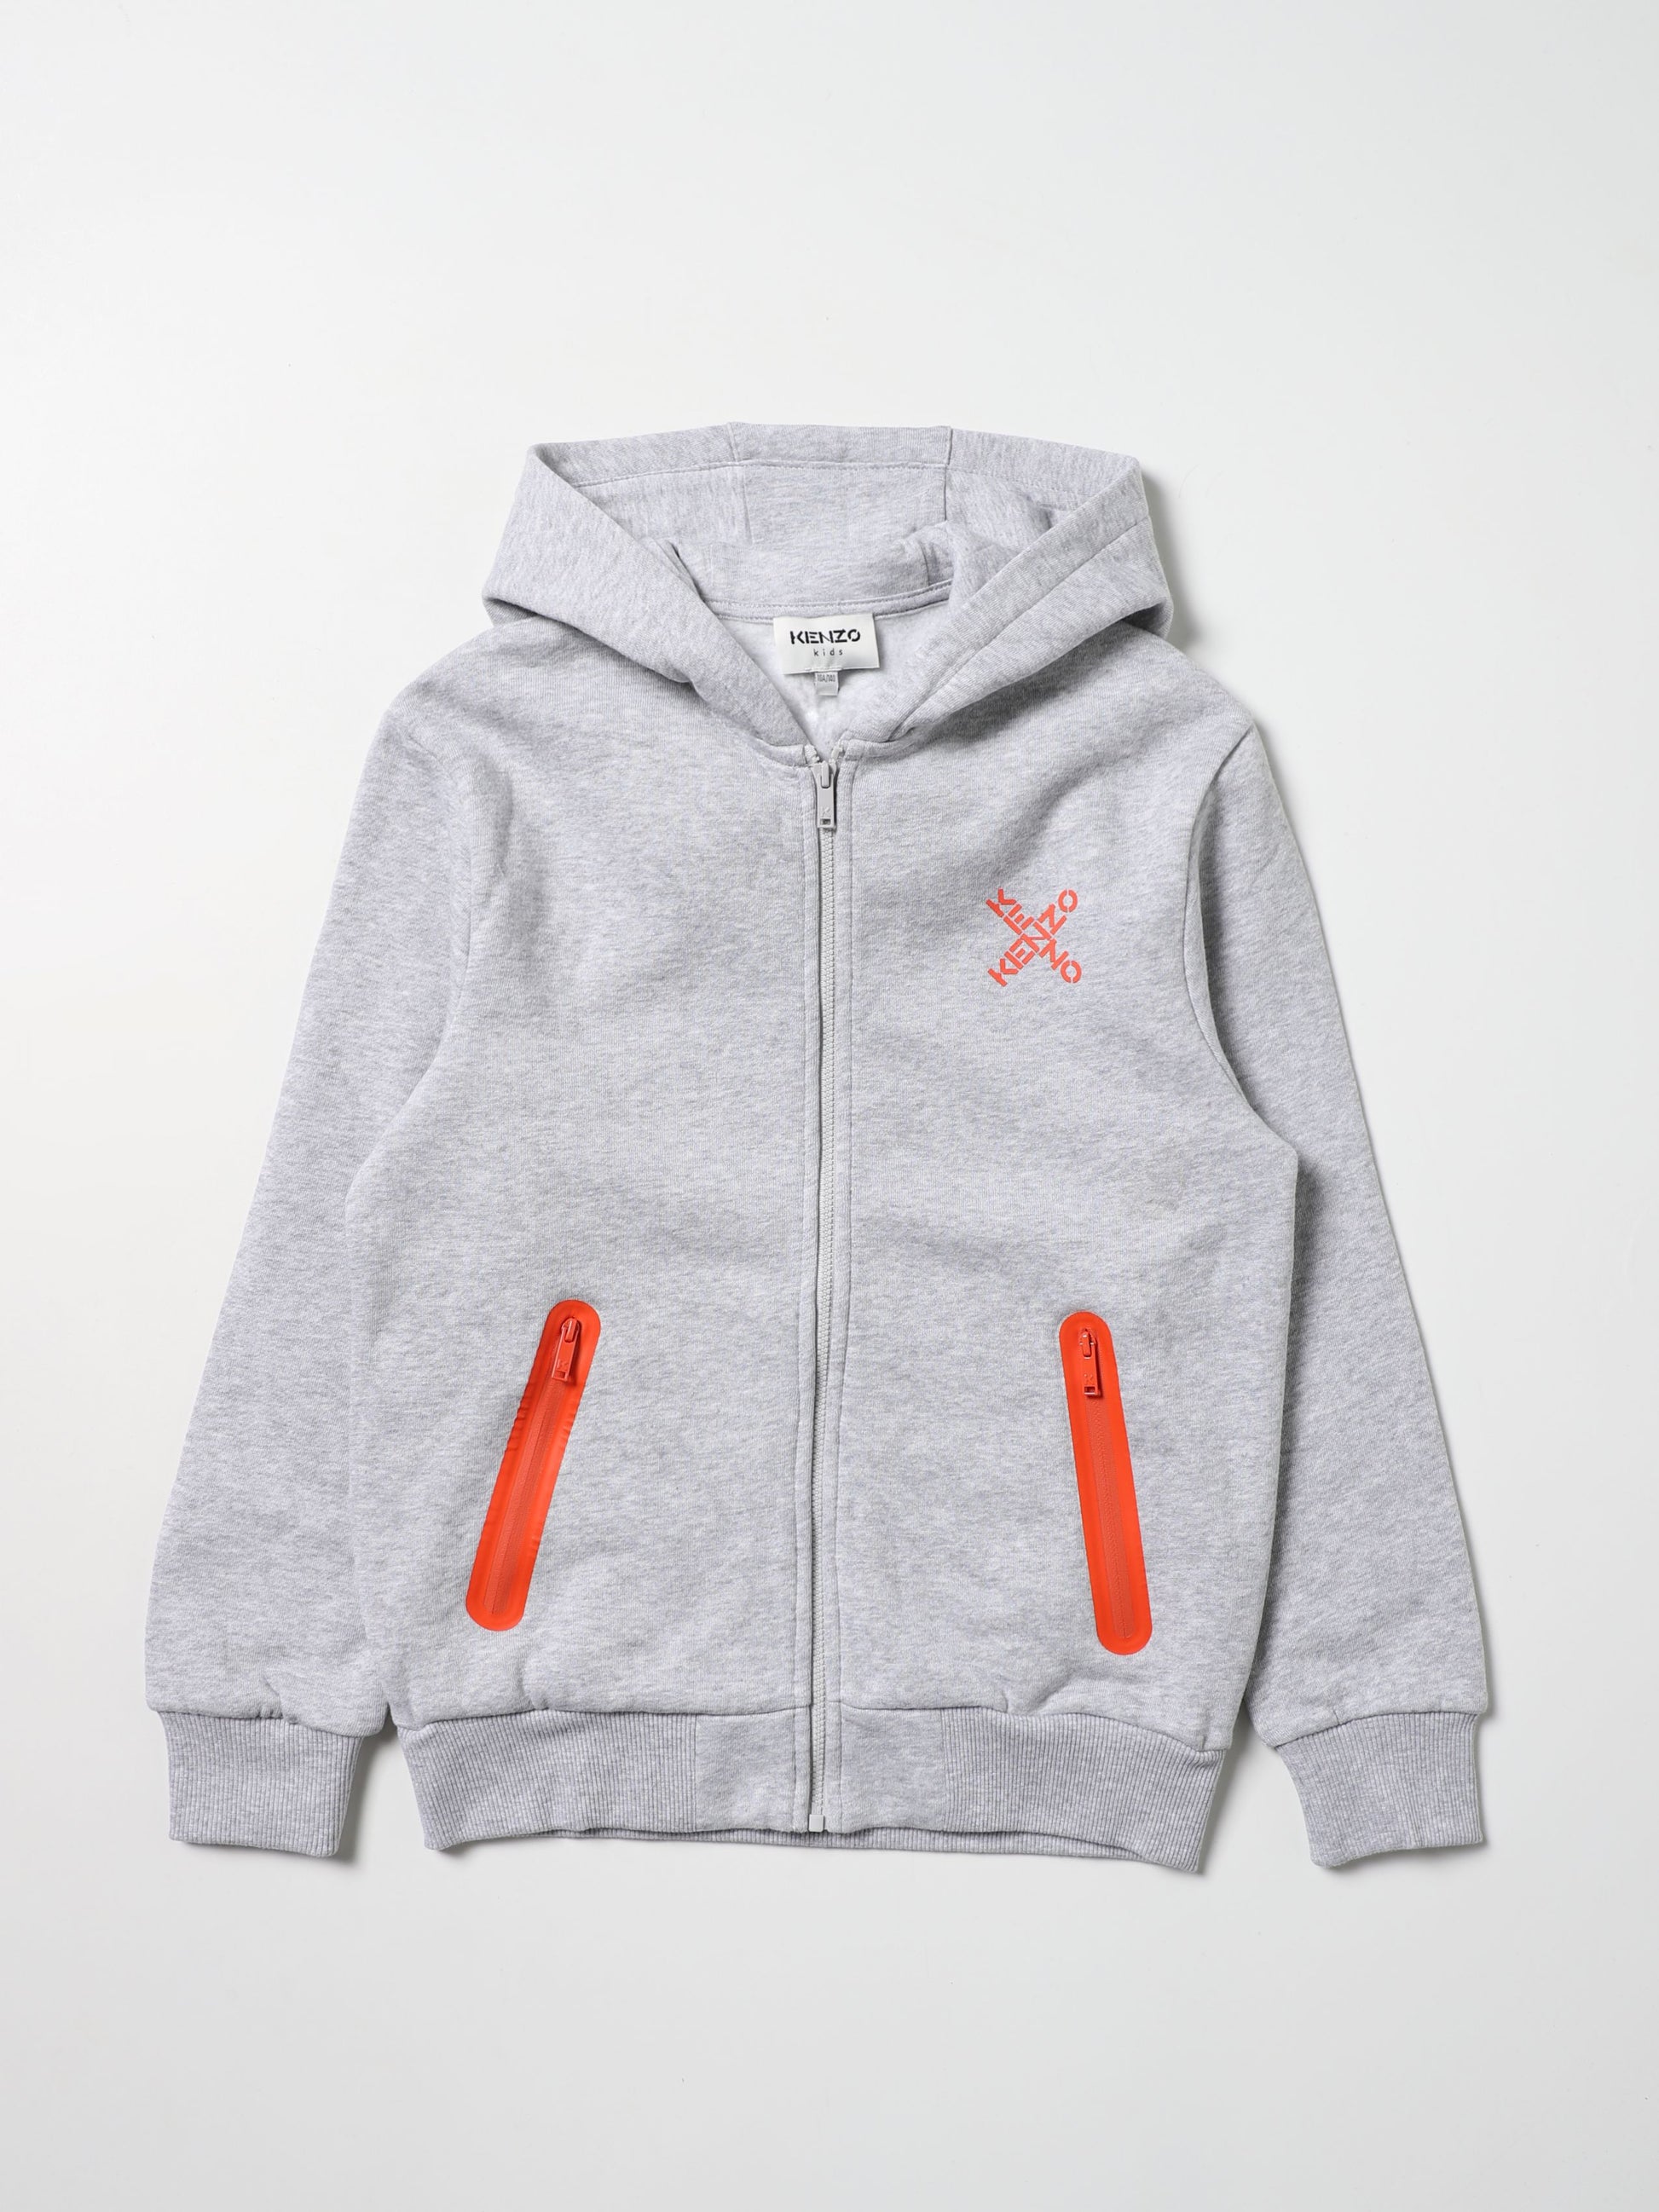 Kenzo Kid's Cardigan Fleece Outfit - Color: Grey Marl - Kids Premium Clothing -